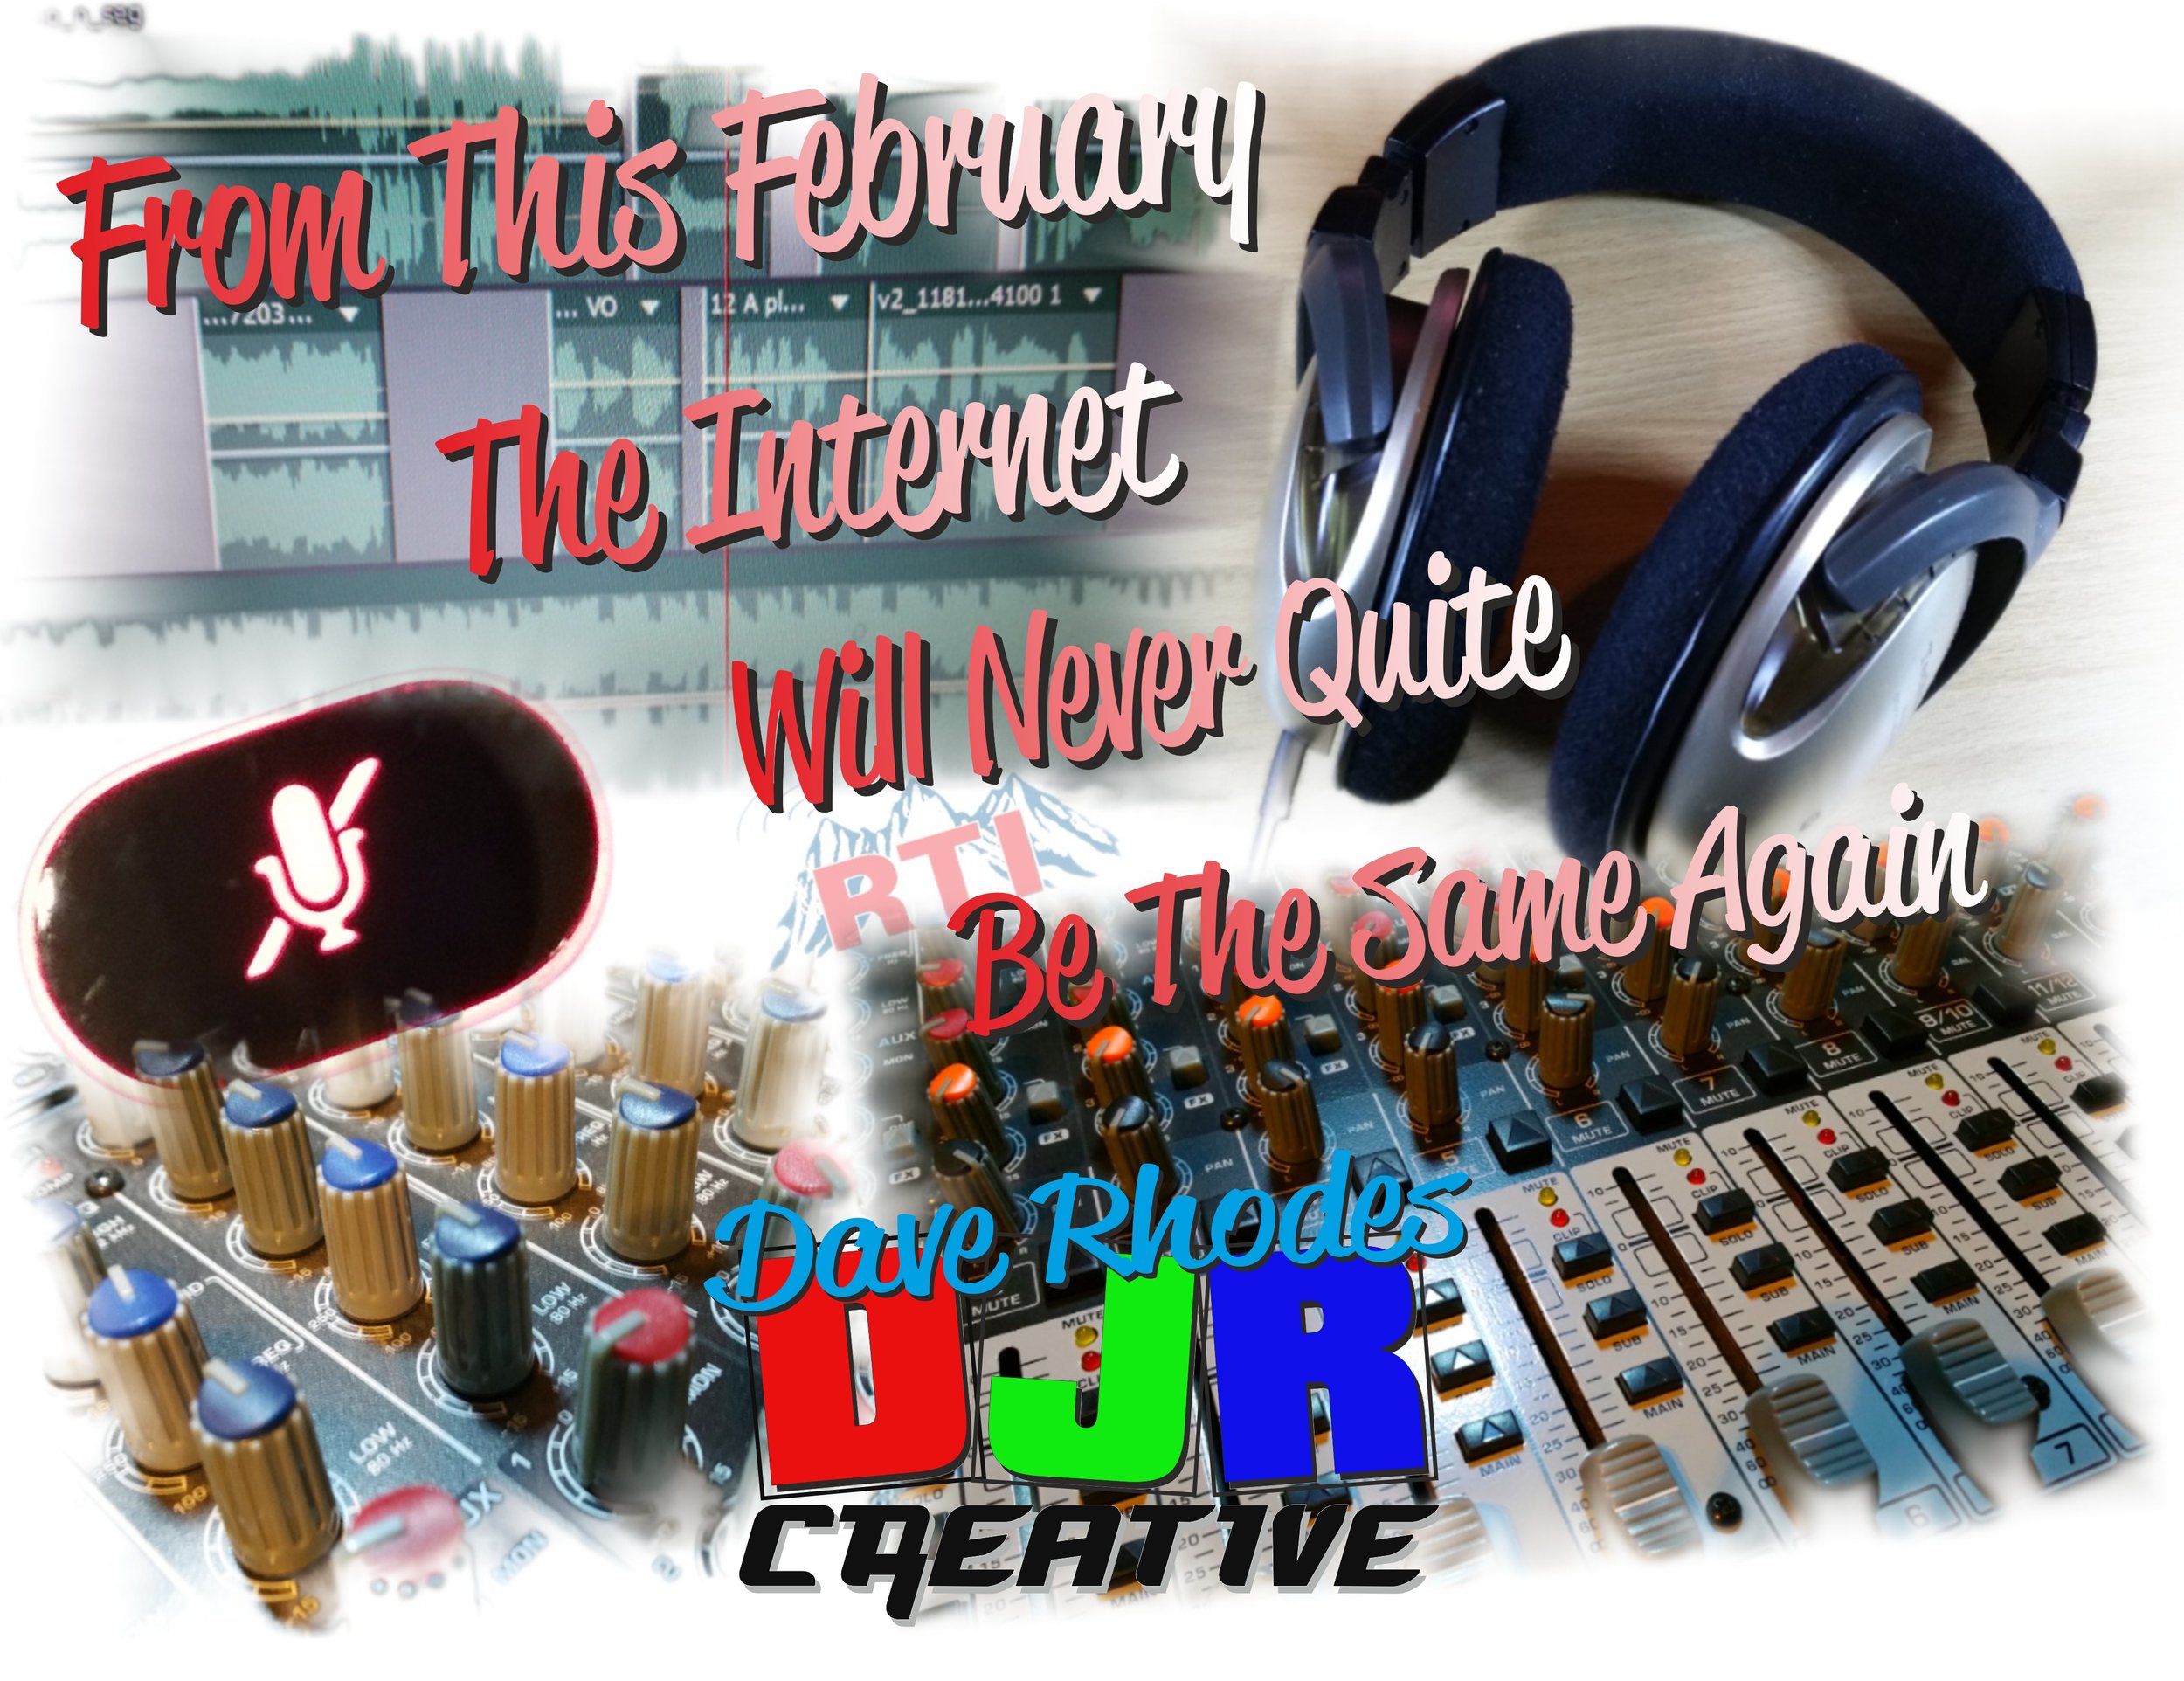 DJR Creative coming soon 1.jpg